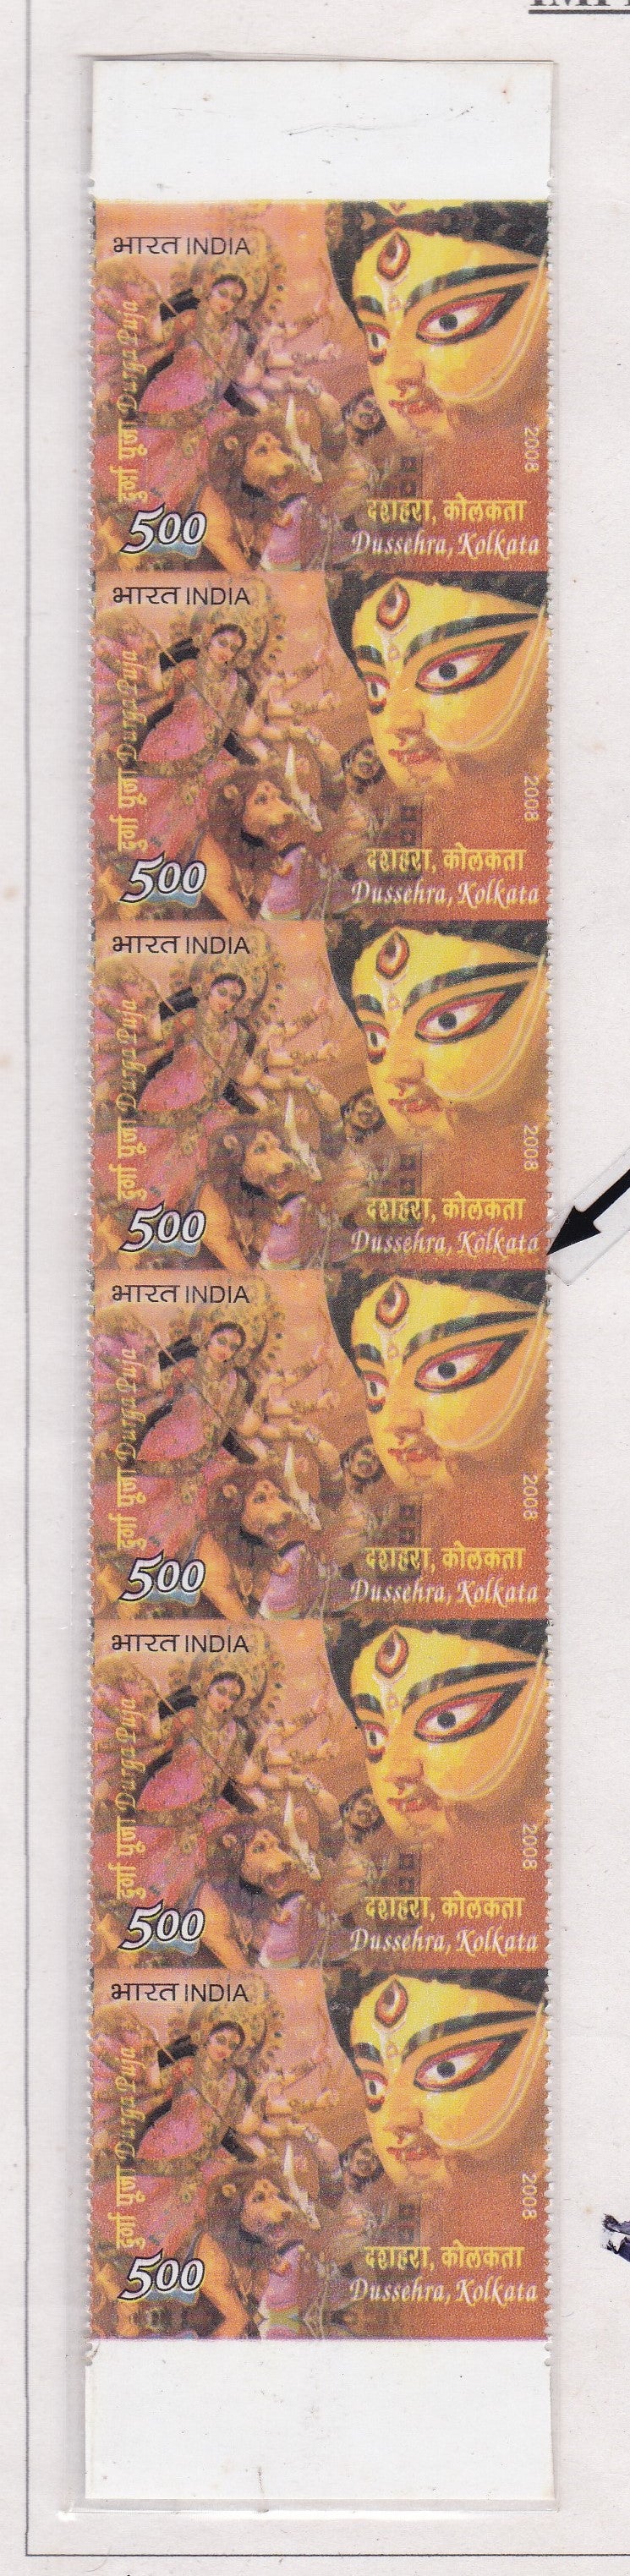 India-error Festivals of India -Dussera ,Kolkata-2008-Horizontal Imperf strip of 6 stamps